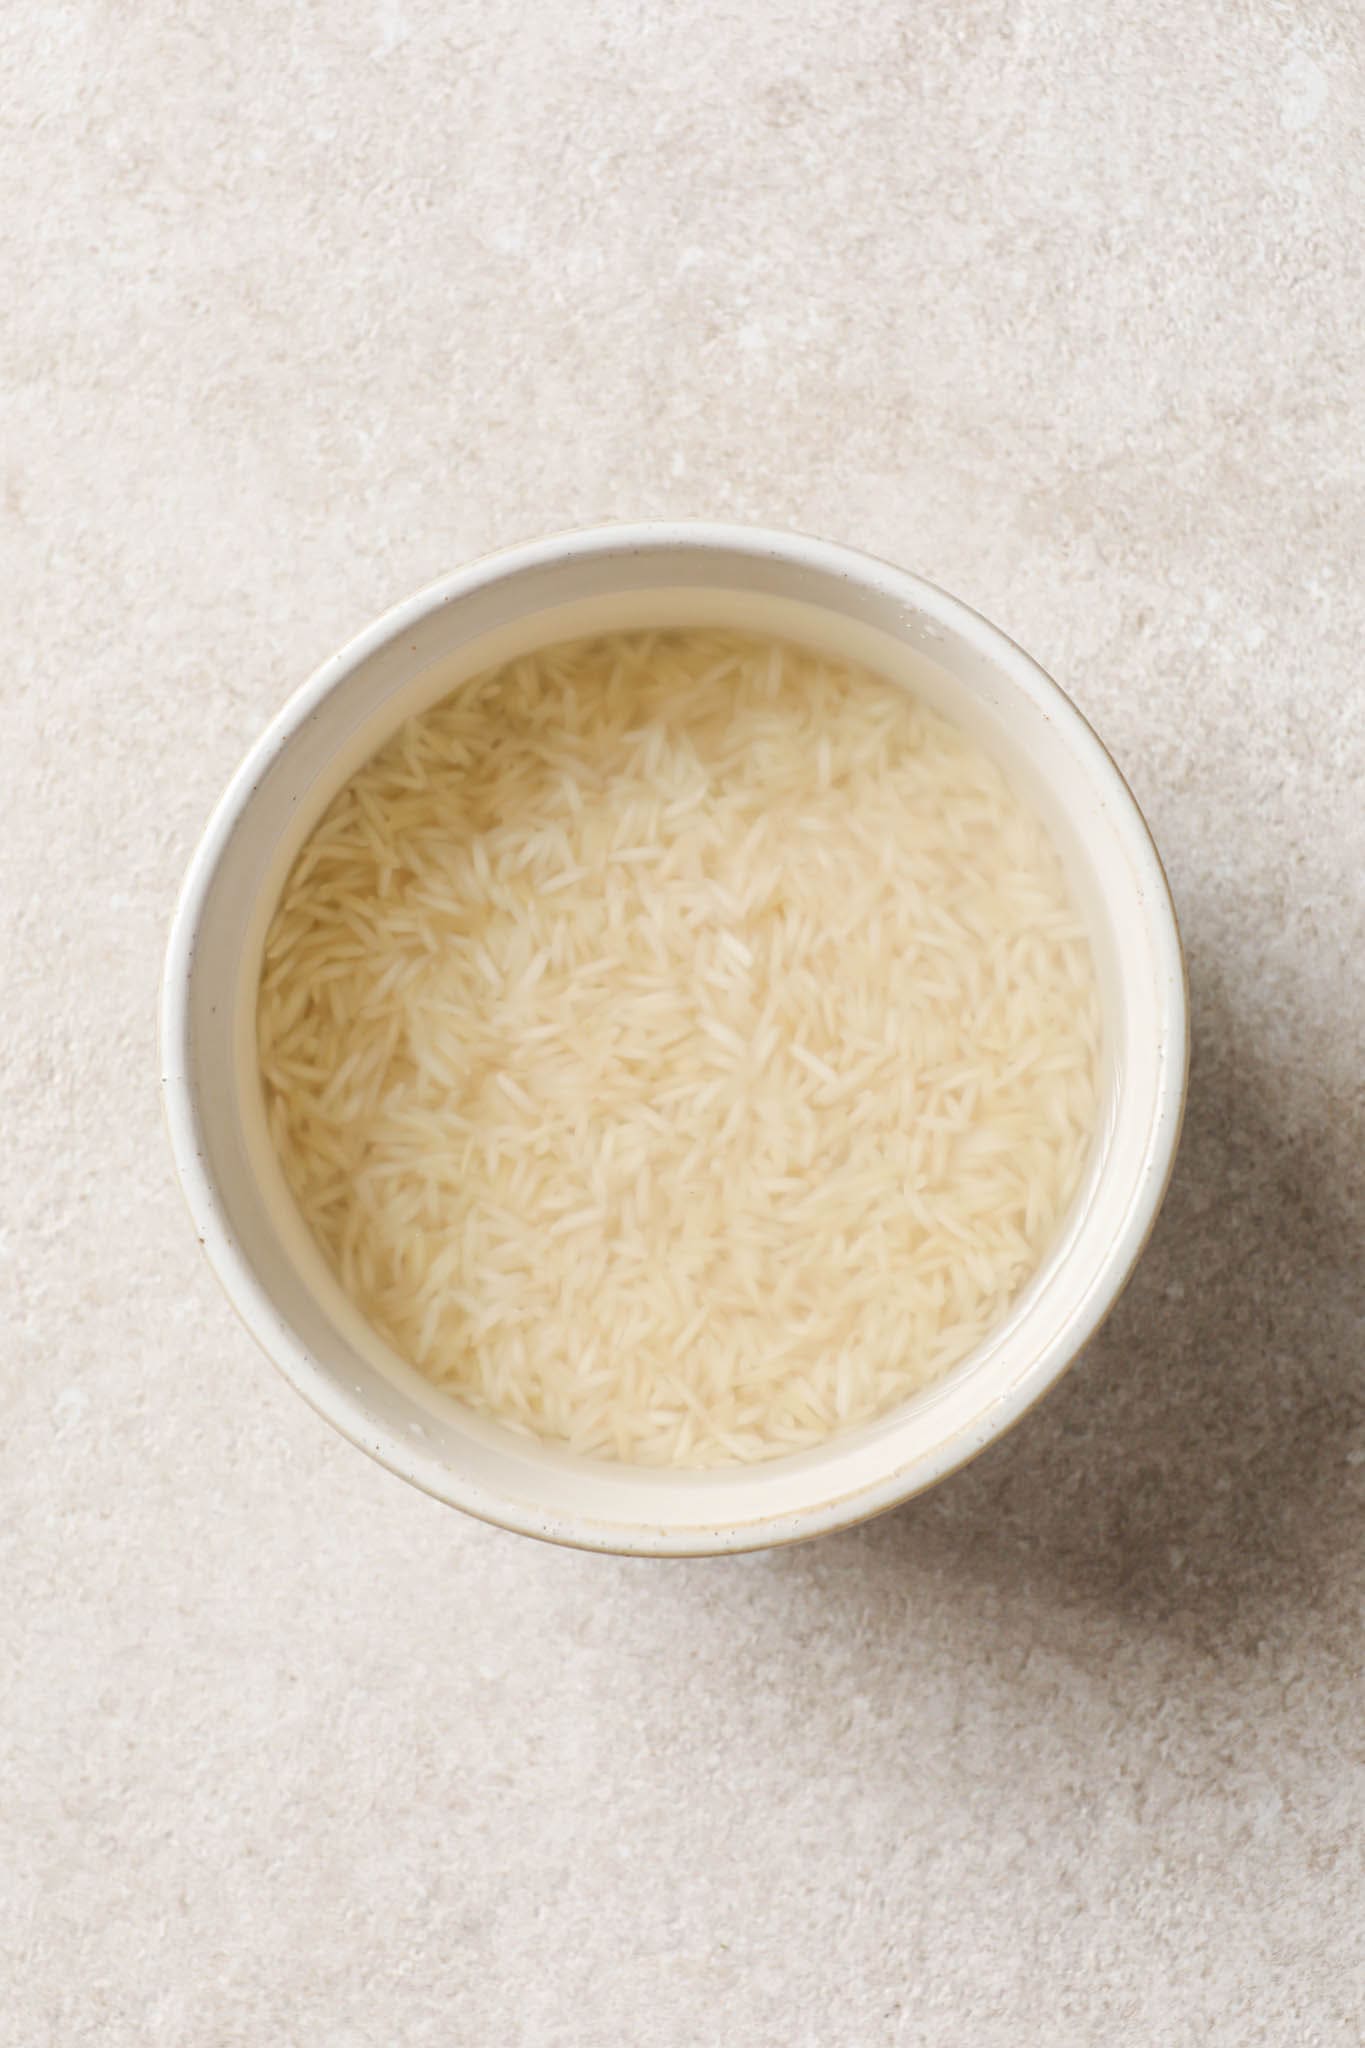 Soaked basmati rice in a bowl